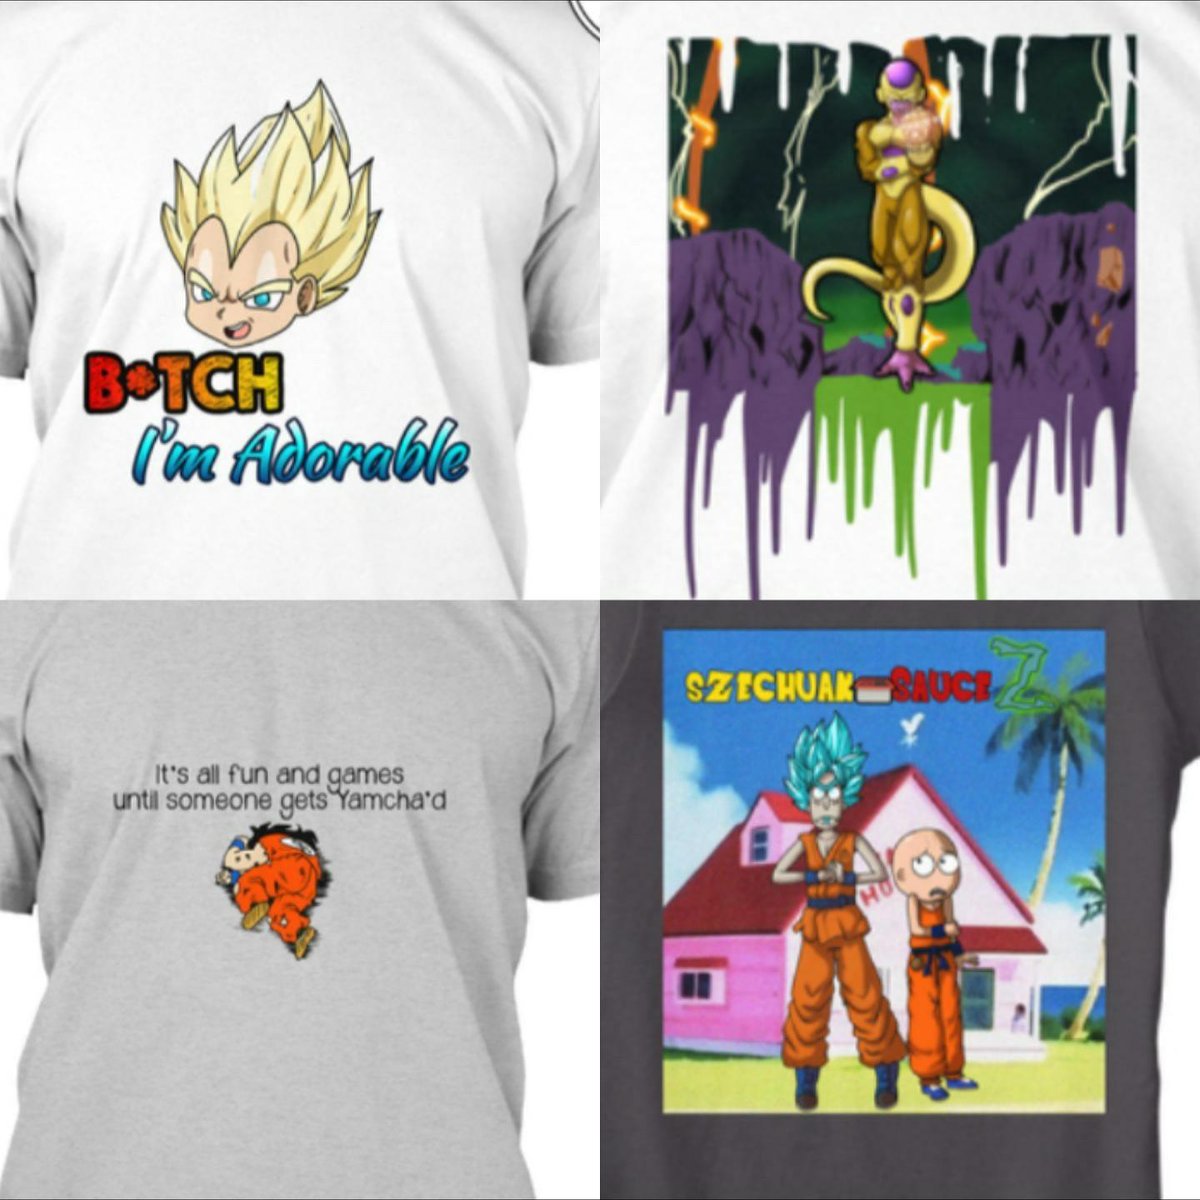 New shirts from fightingnerdy designs

teespring.com/stores/fightin…
#DragonBallSuper #dbz #RickAndMorty #AvengerInfinityWar #DRAGONBALLFighterZ #DragonBallLegends #DragonBallZ #DragonBall #DragonBallHeroes #tshirt